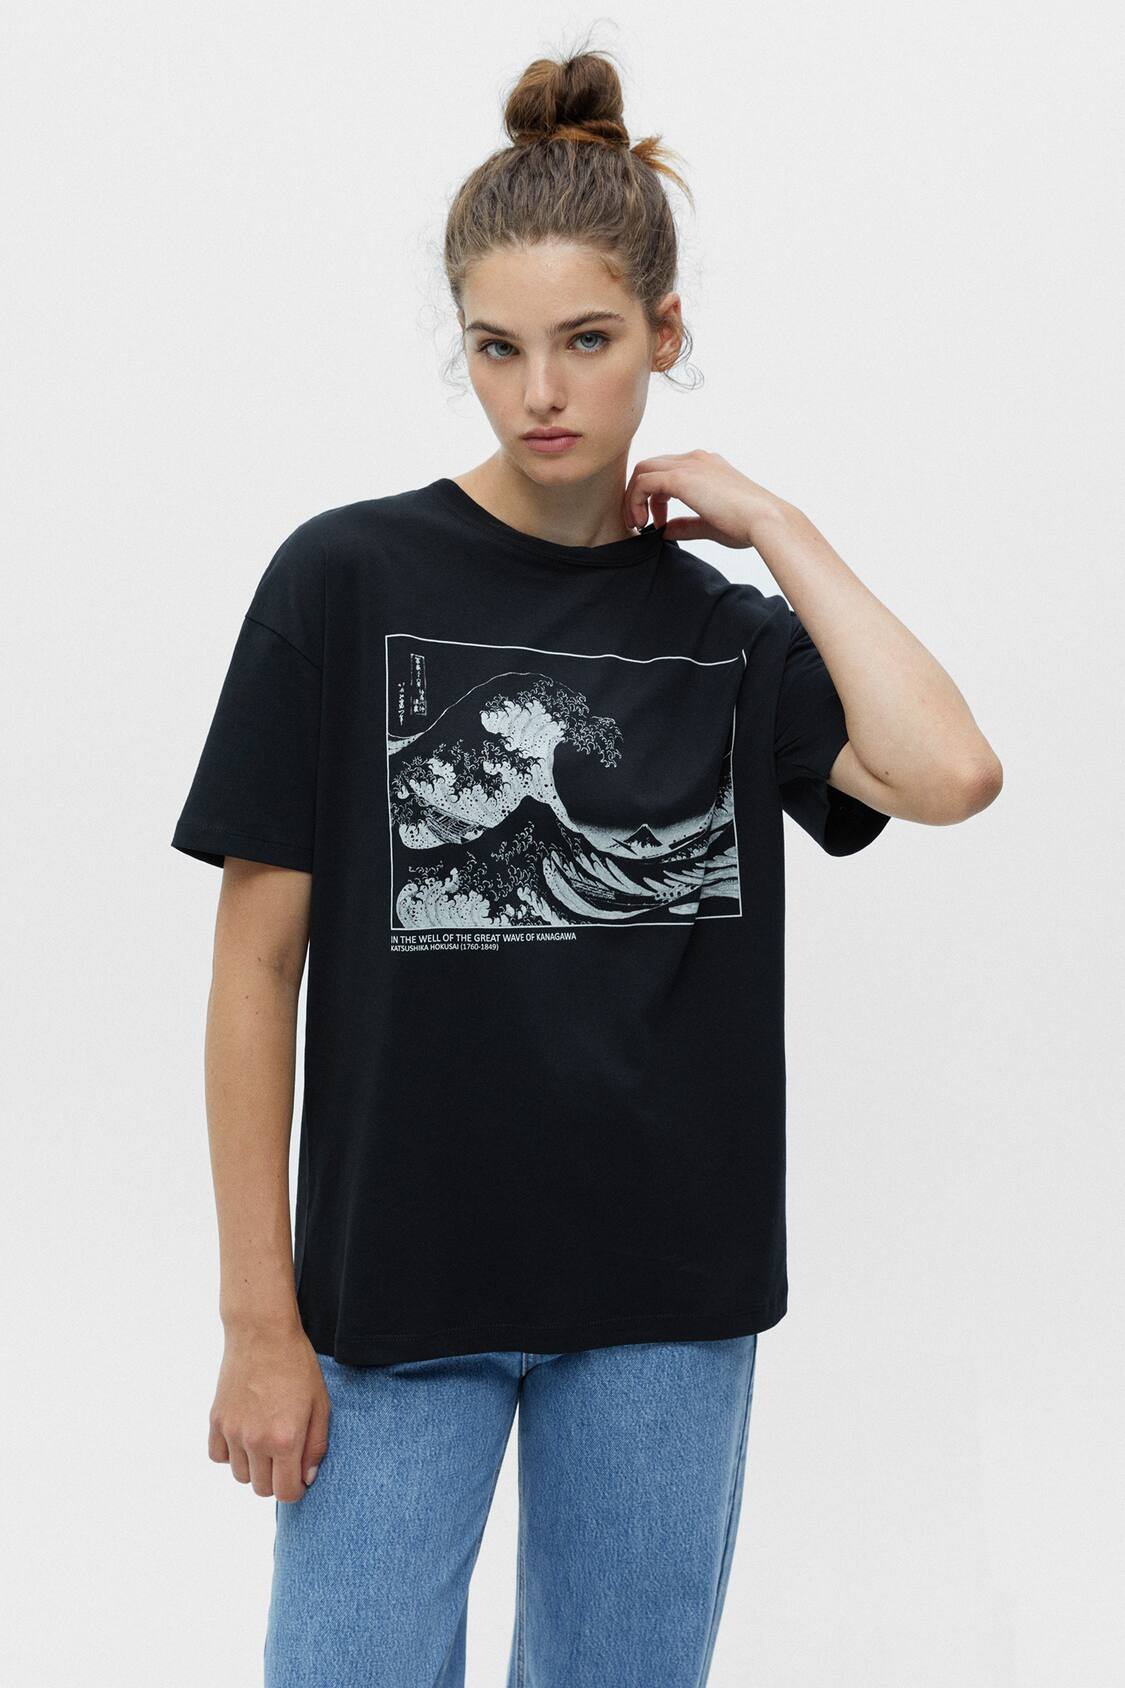 Montón de Descartar salario Camiseta negra La gran ola de Kanagawa - PULL&BEAR